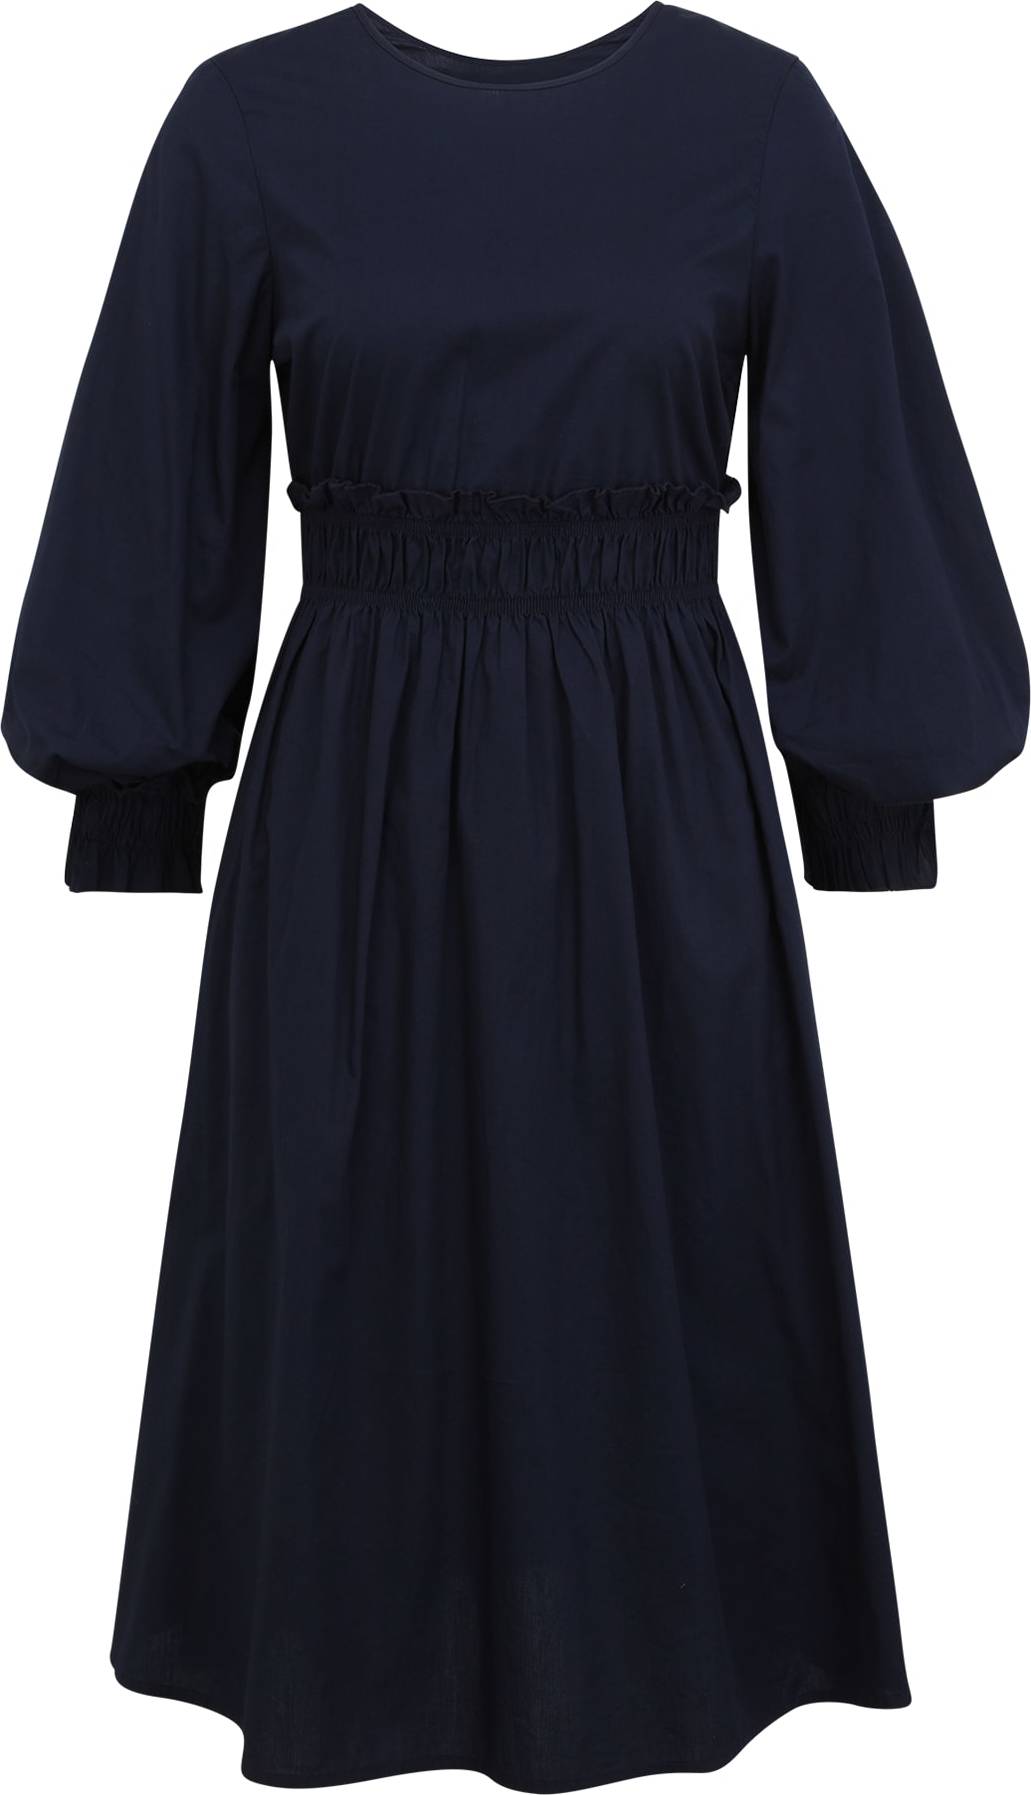 Vero Moda Petite Šaty 'April' námořnická modř